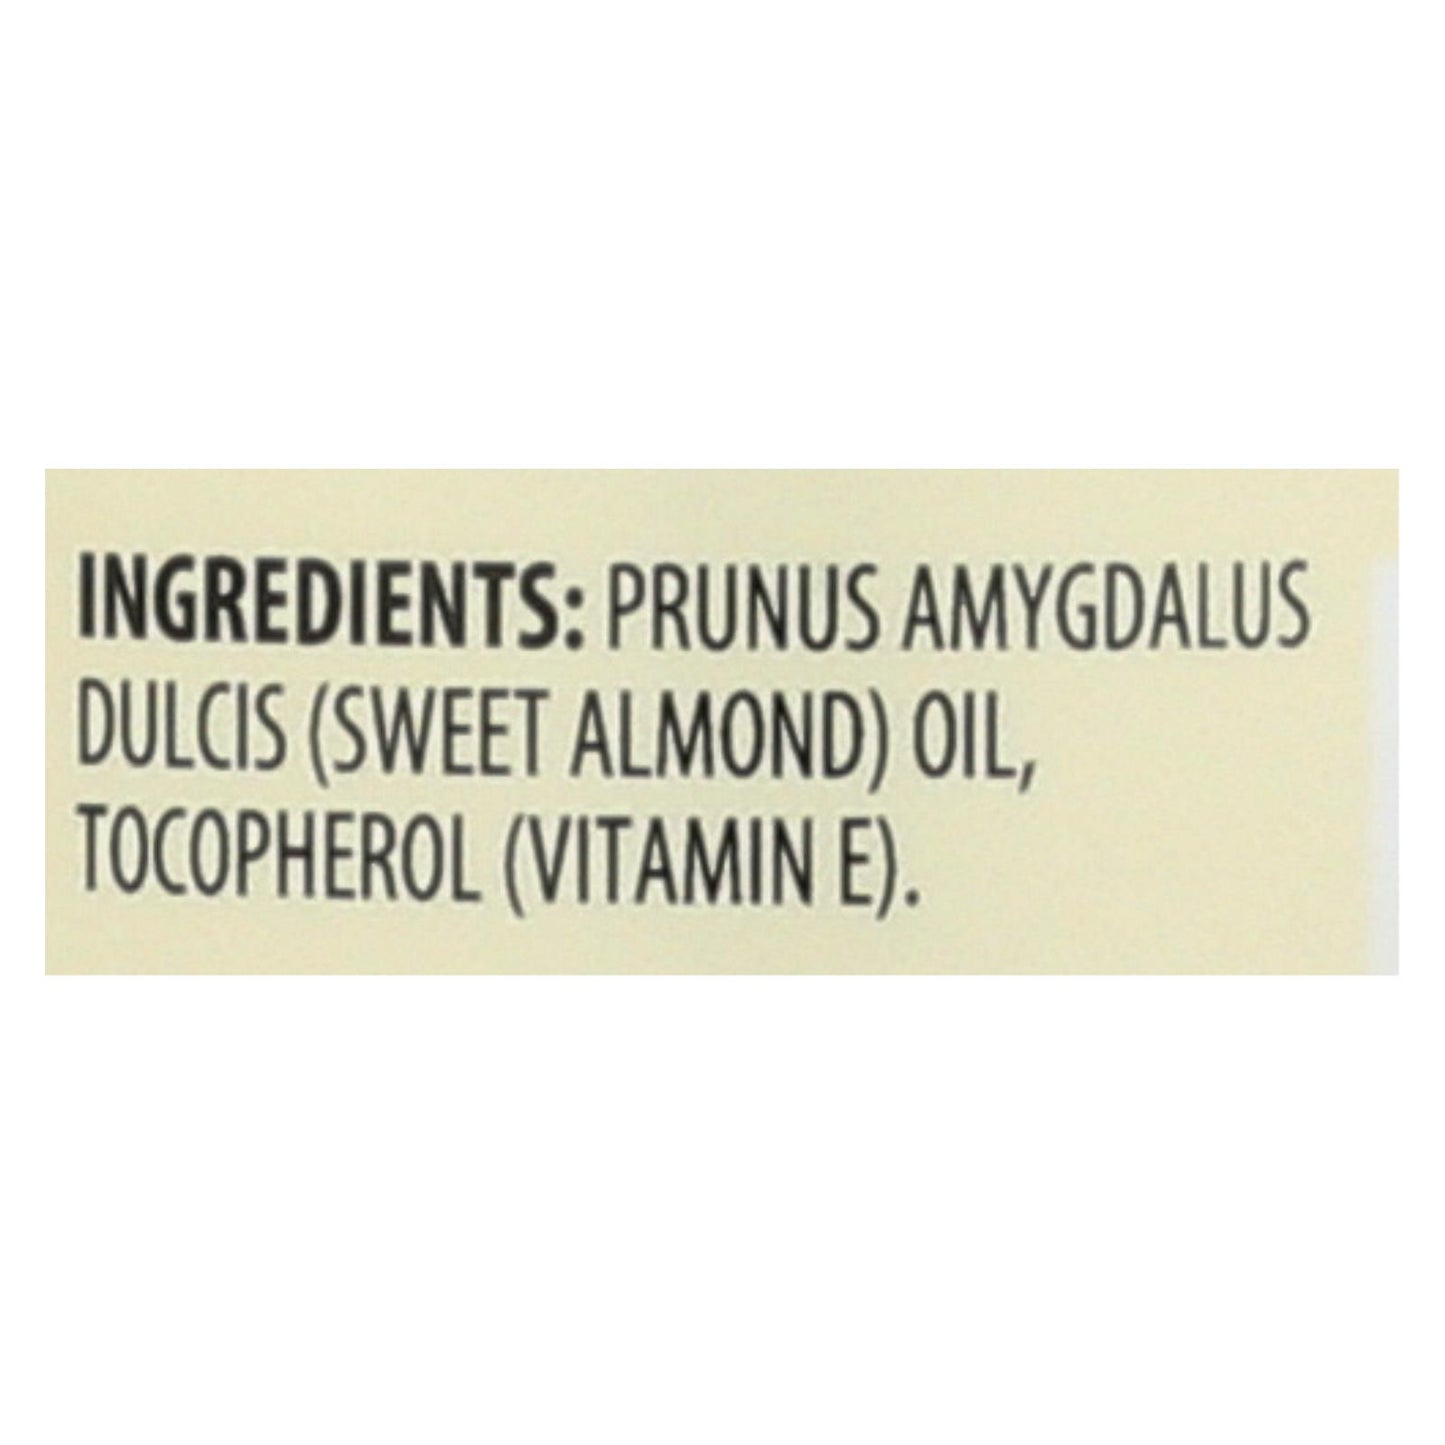 Aura Cacia - Natural Skin Care Oil Sweet Almond - 16 Fl Oz